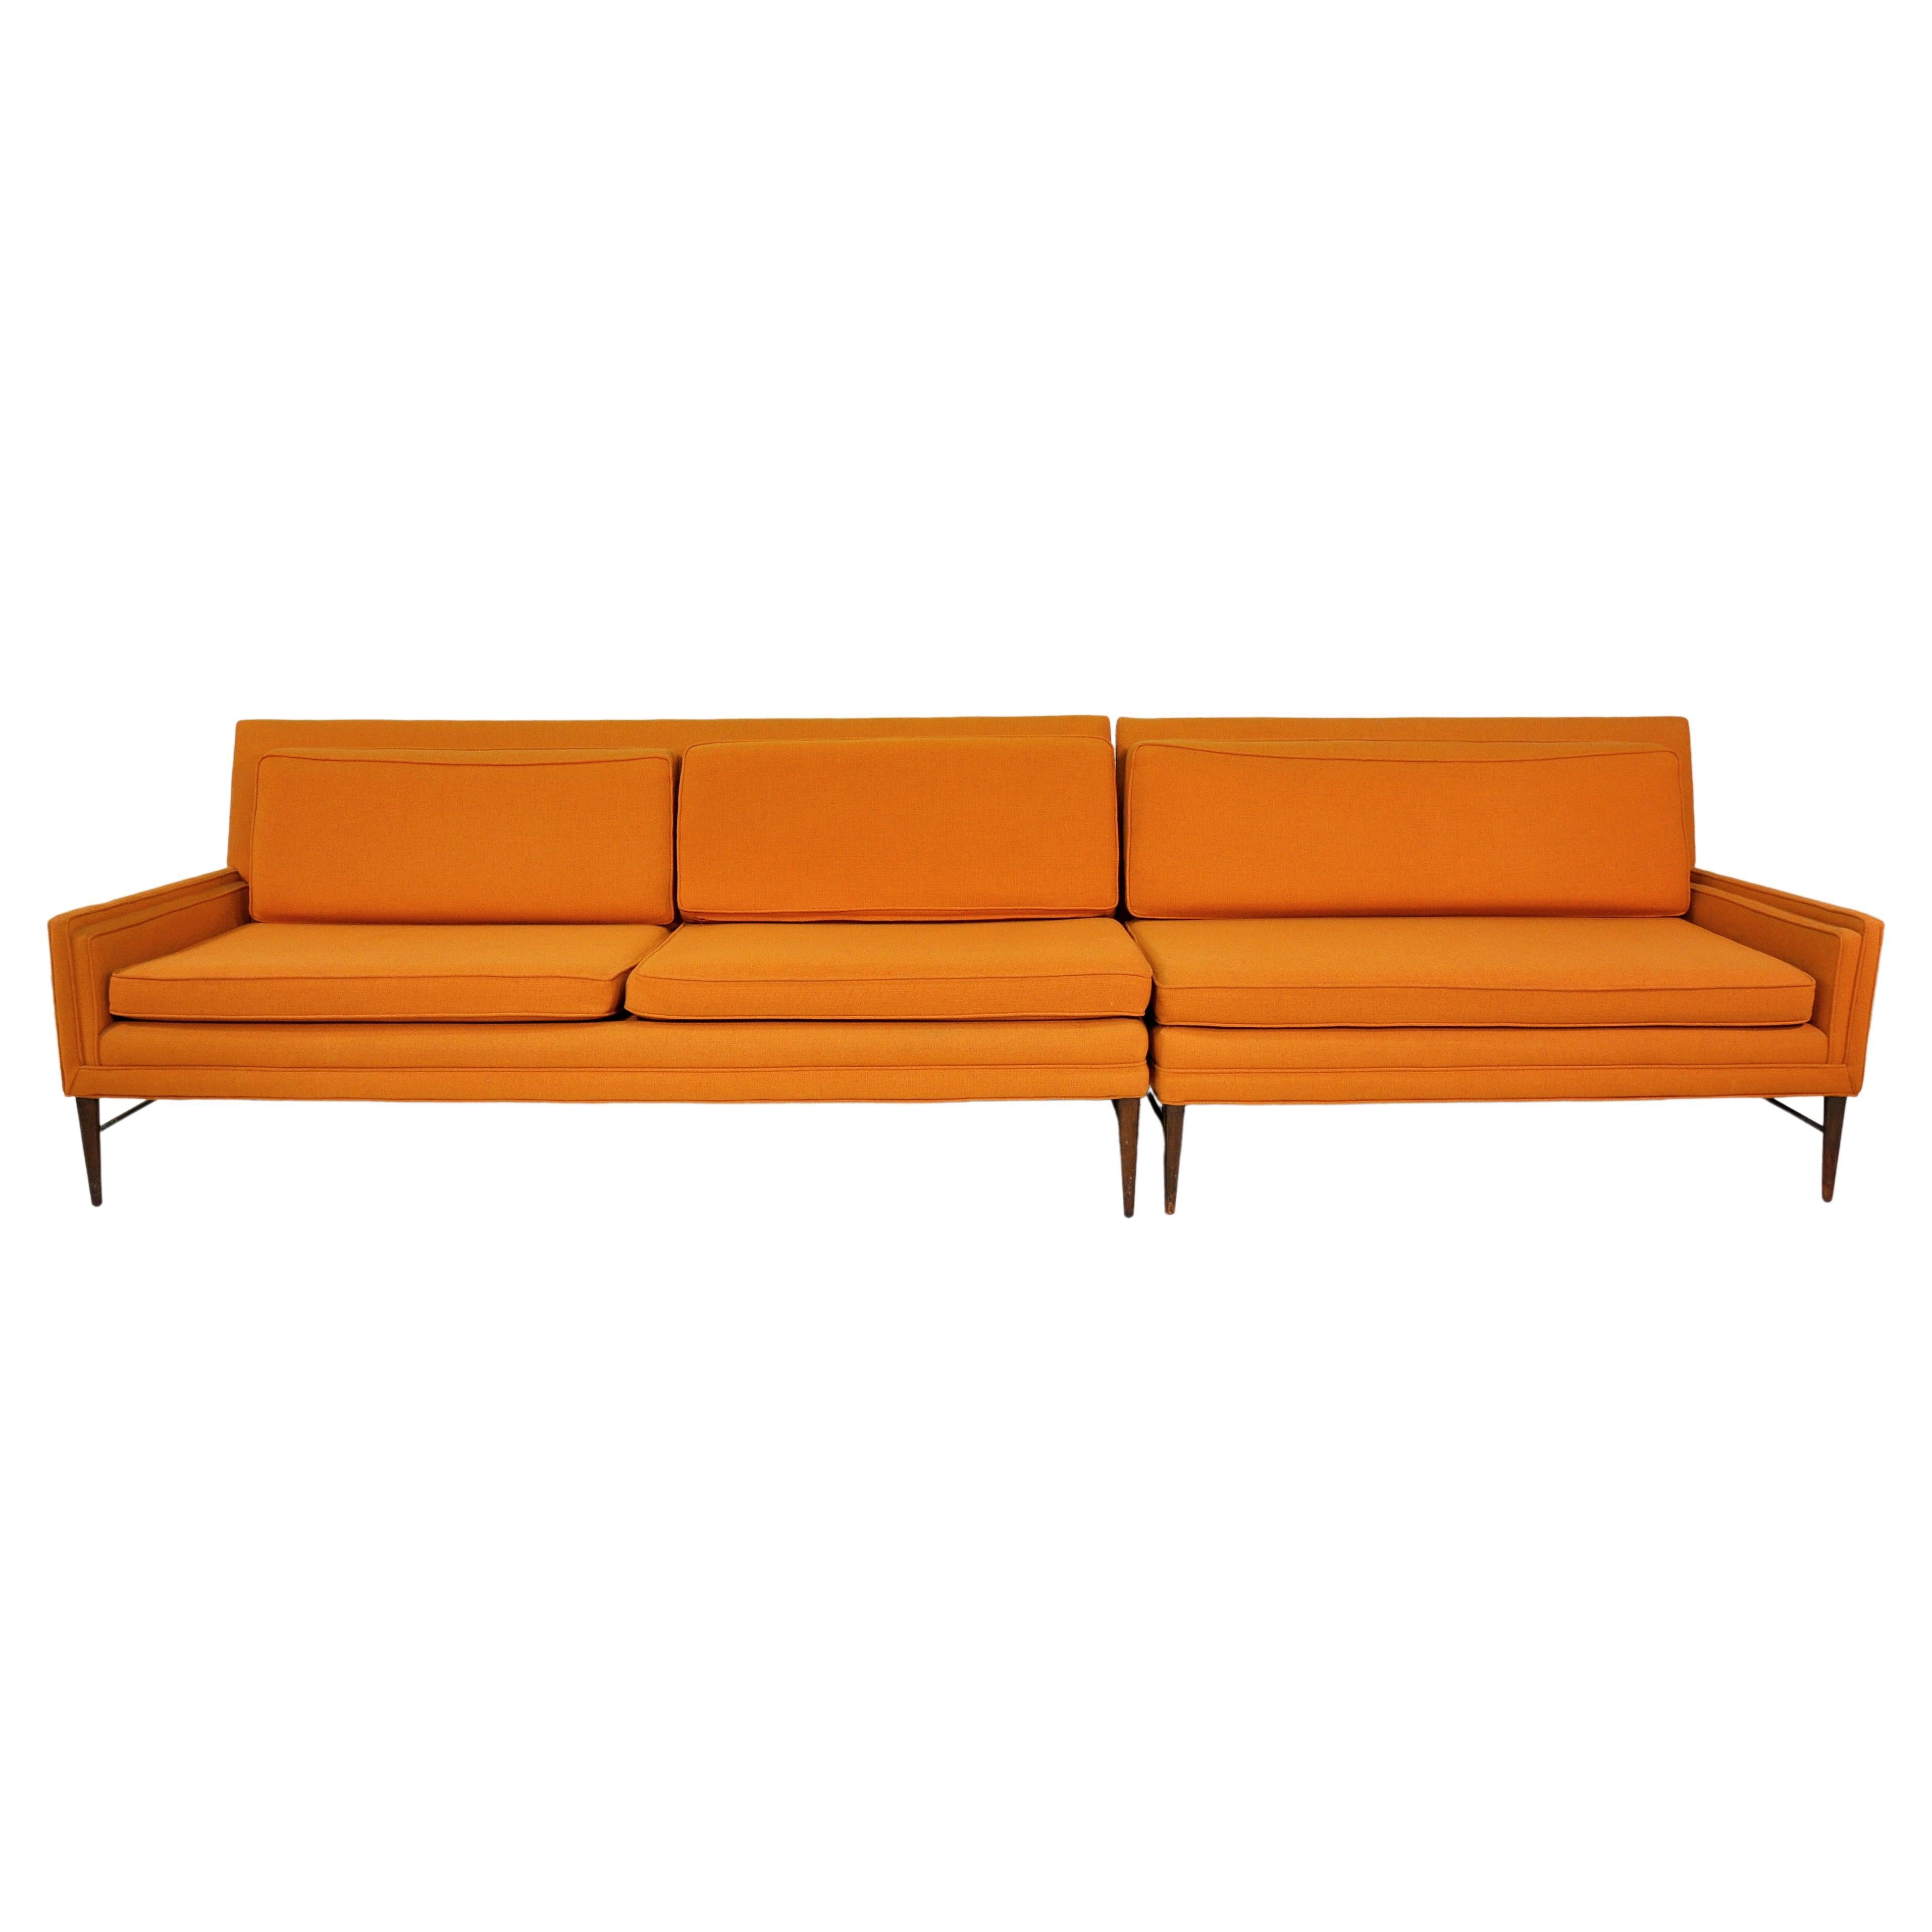 McCobb Walnut and Brass Burnt Orange Sectional Sofa